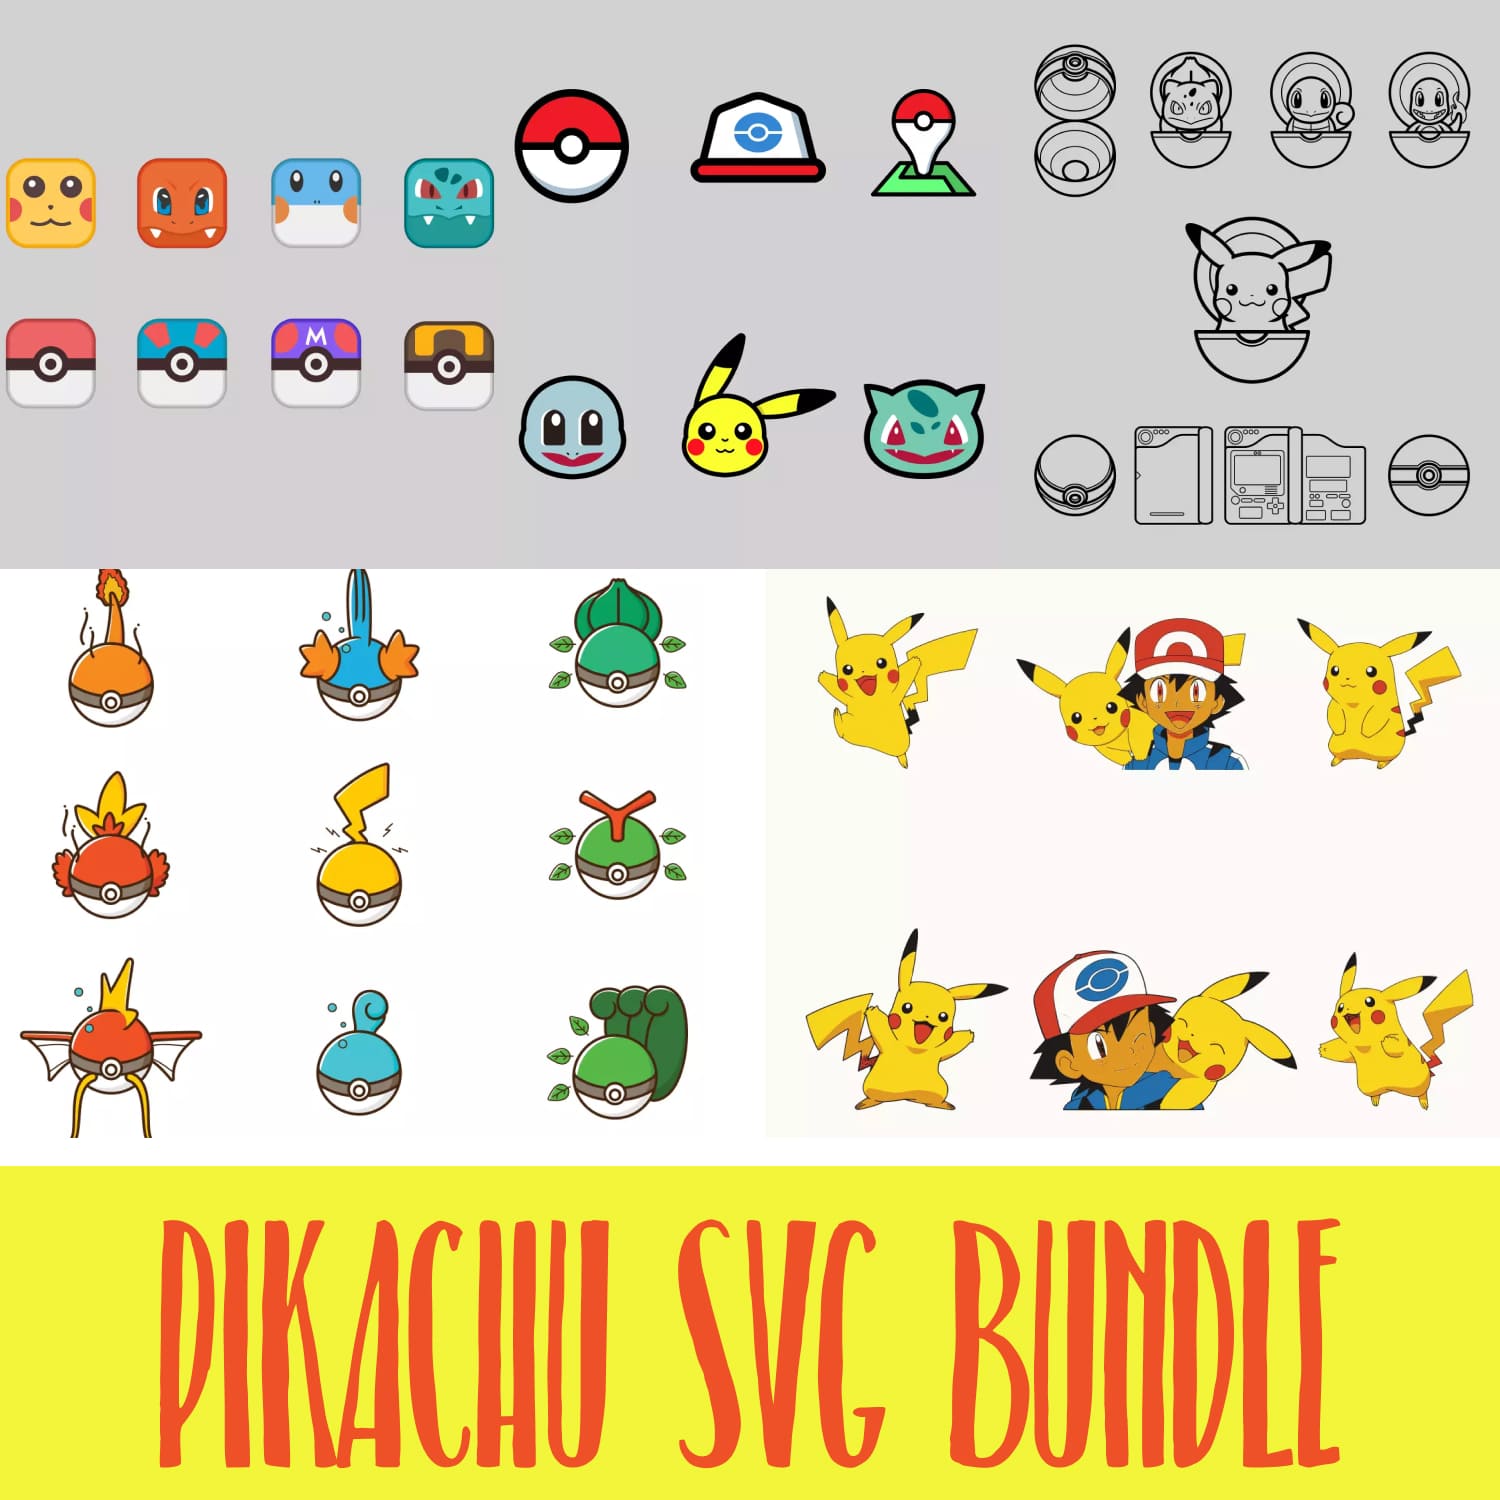 Pikachu SVG Bundle.